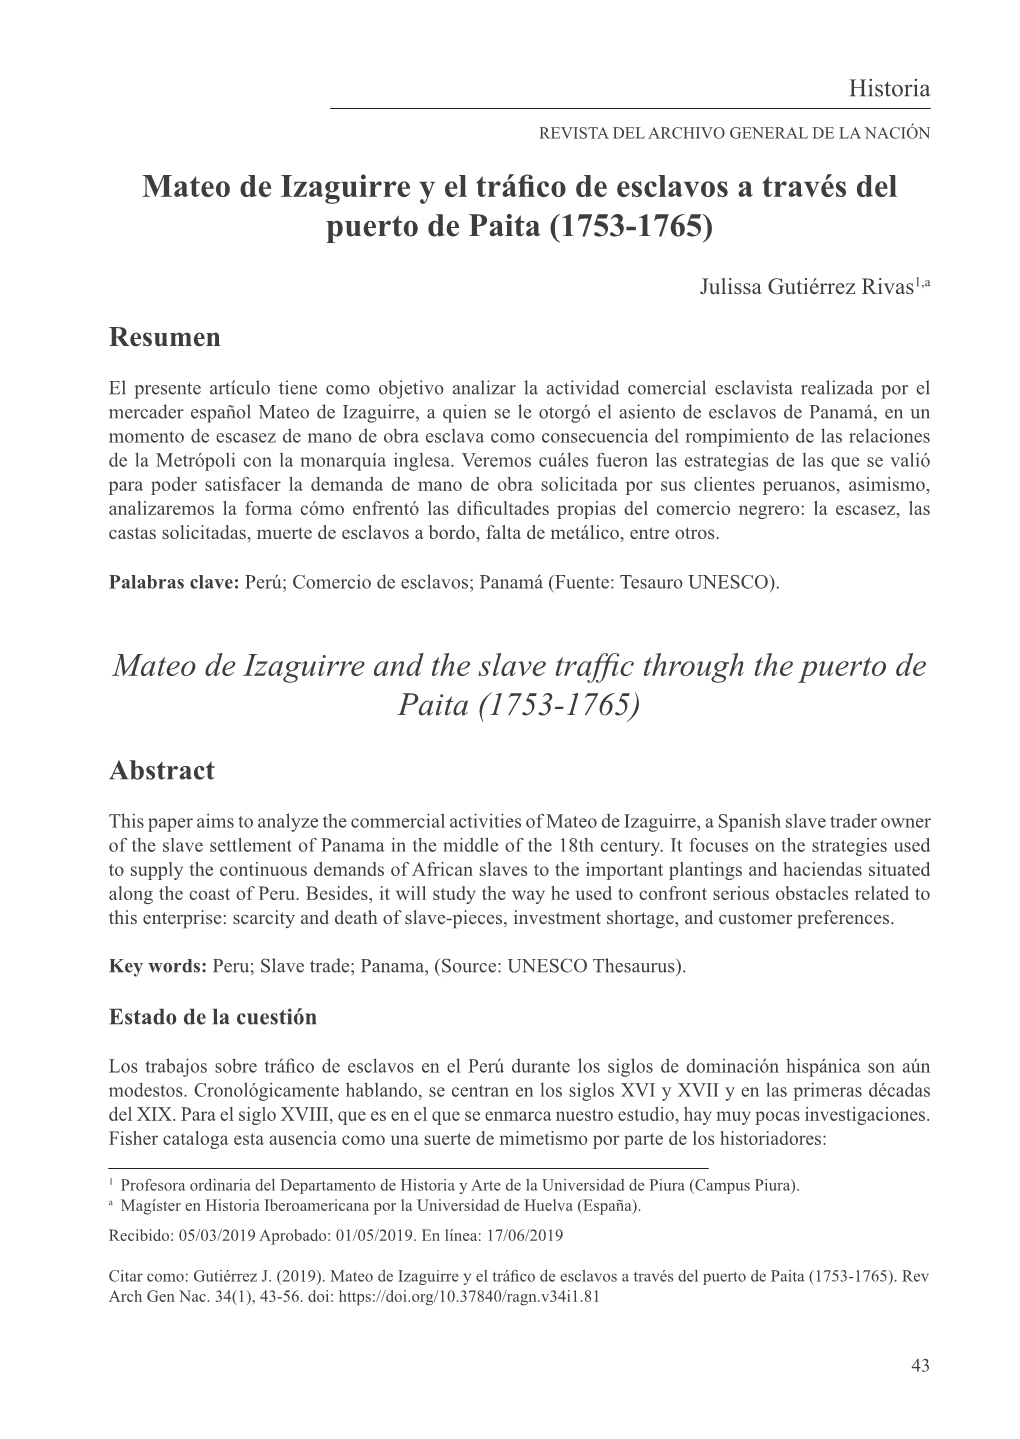 Mateo De Izaguirre and the Slave Traffic Through the Puerto De Paita (1753-1765)